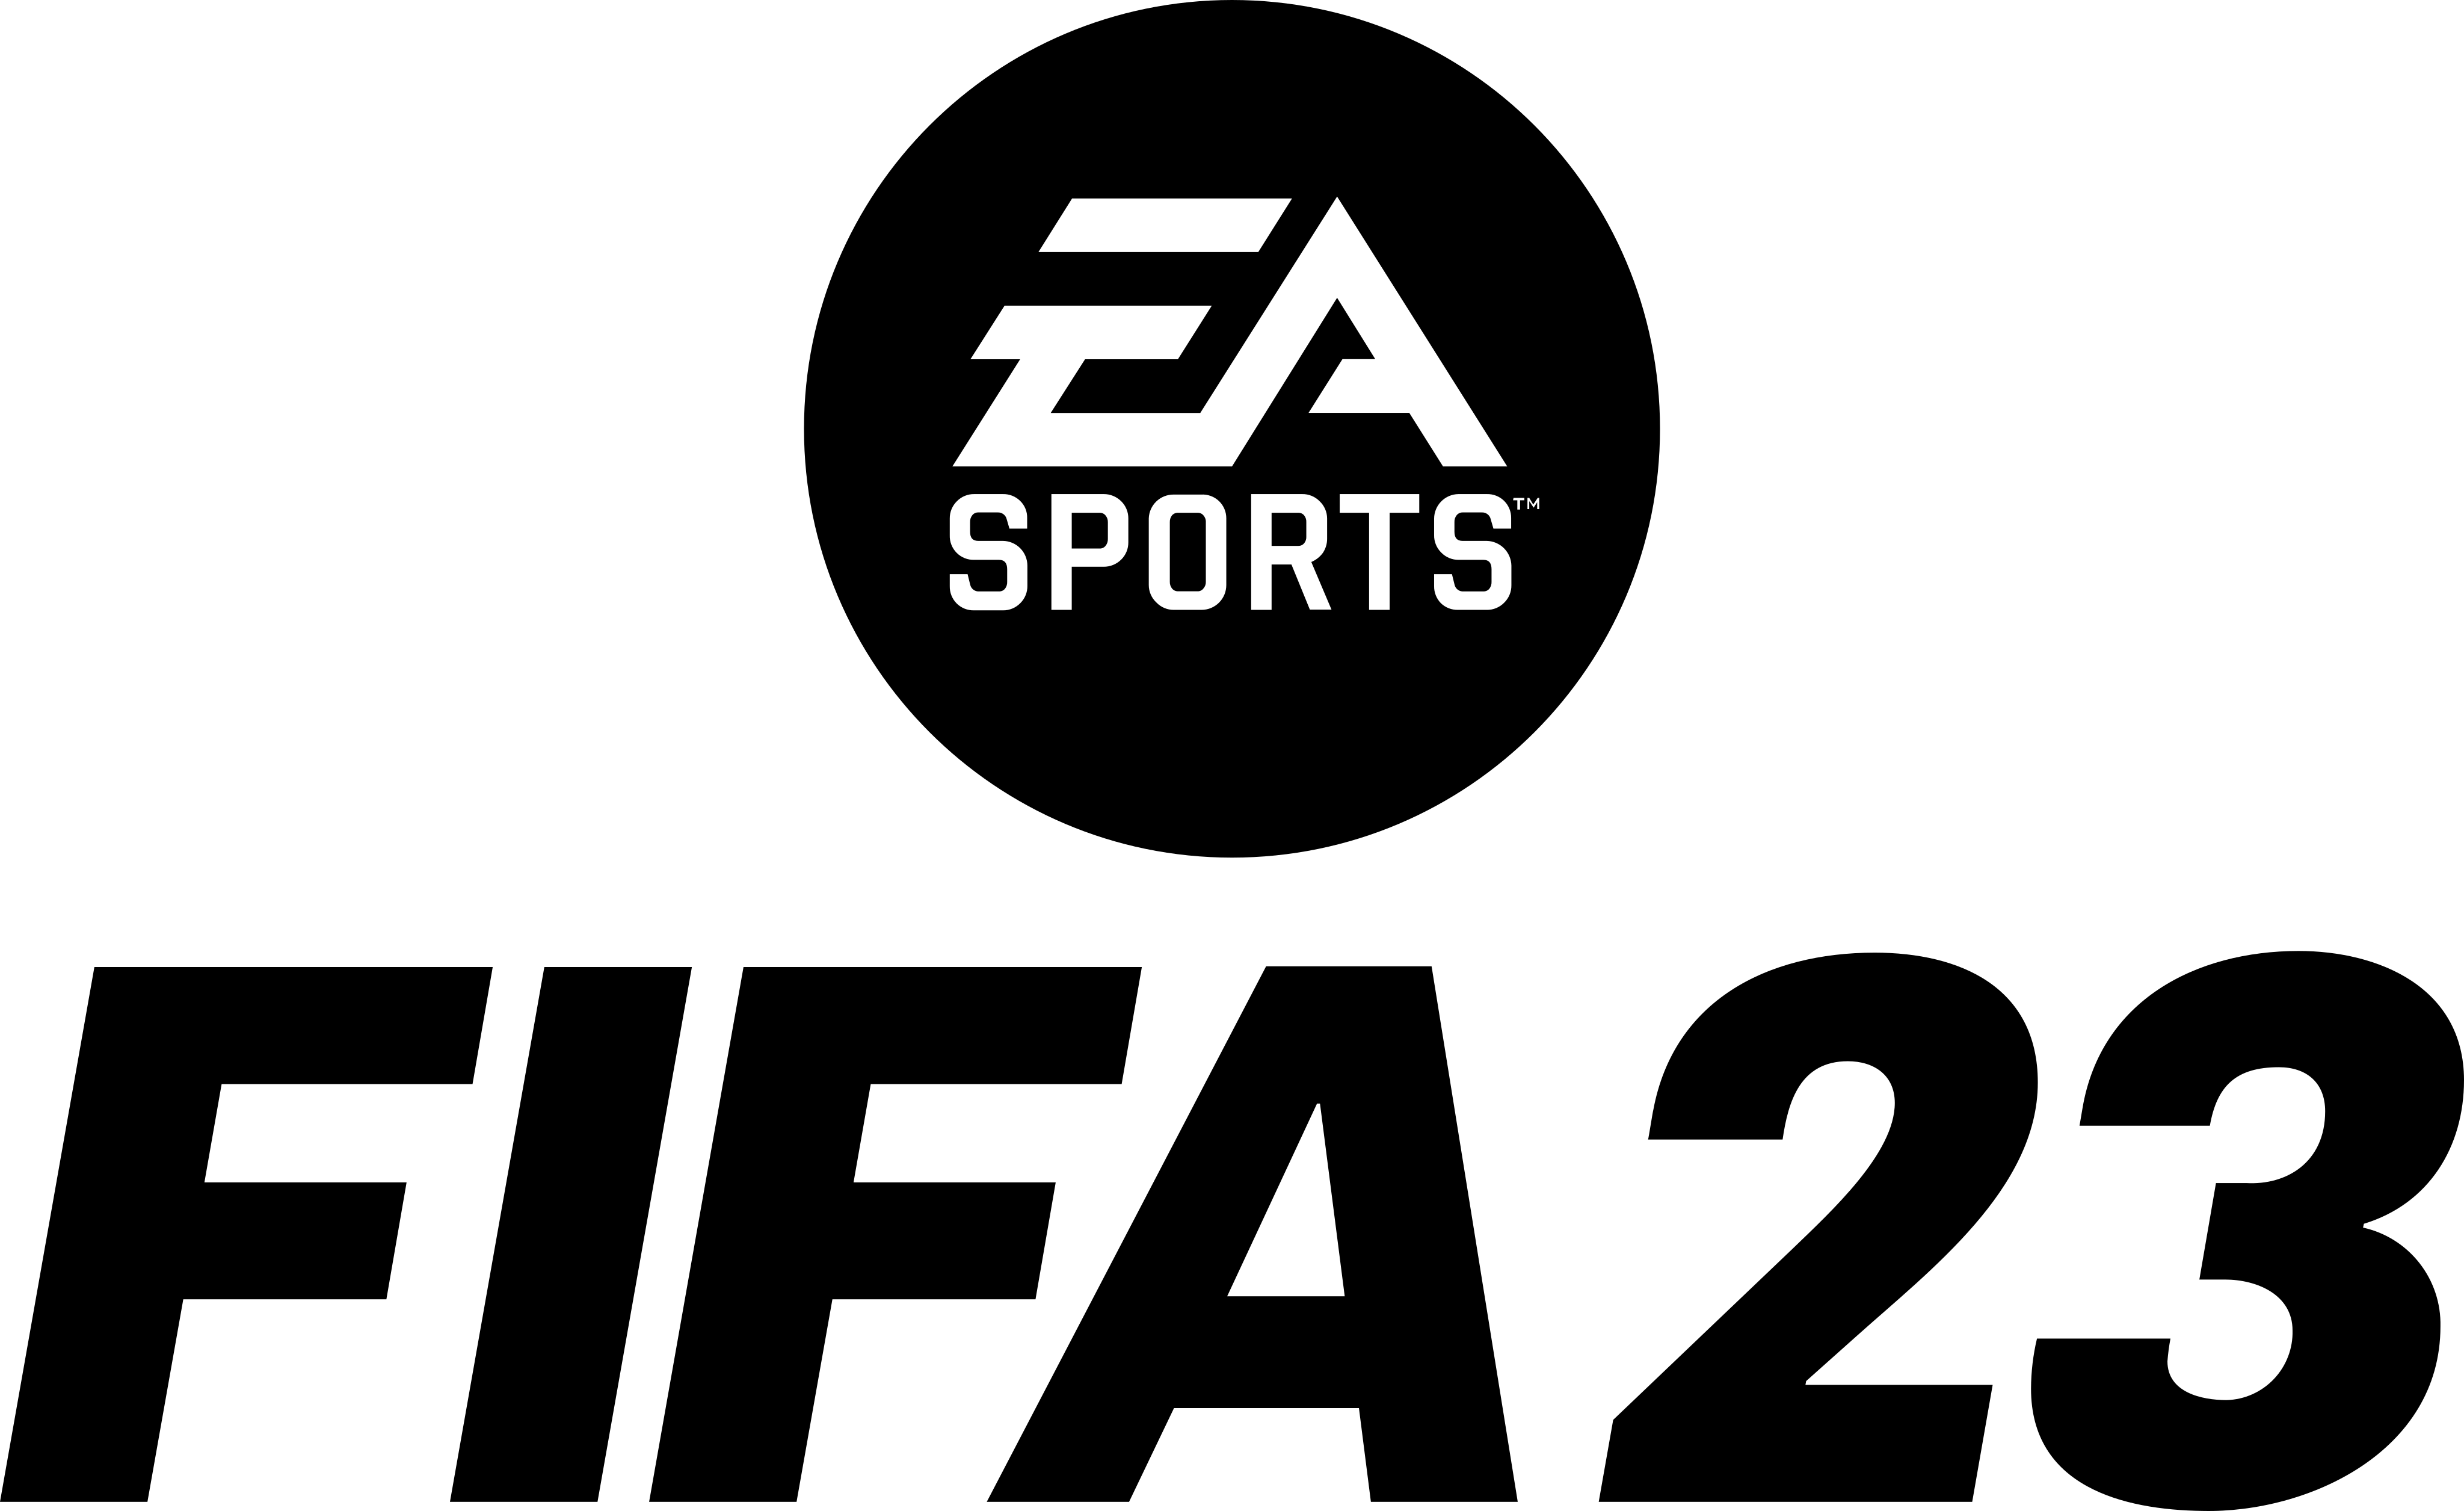 fifa23 logo 1 - FIFA 23 Logo